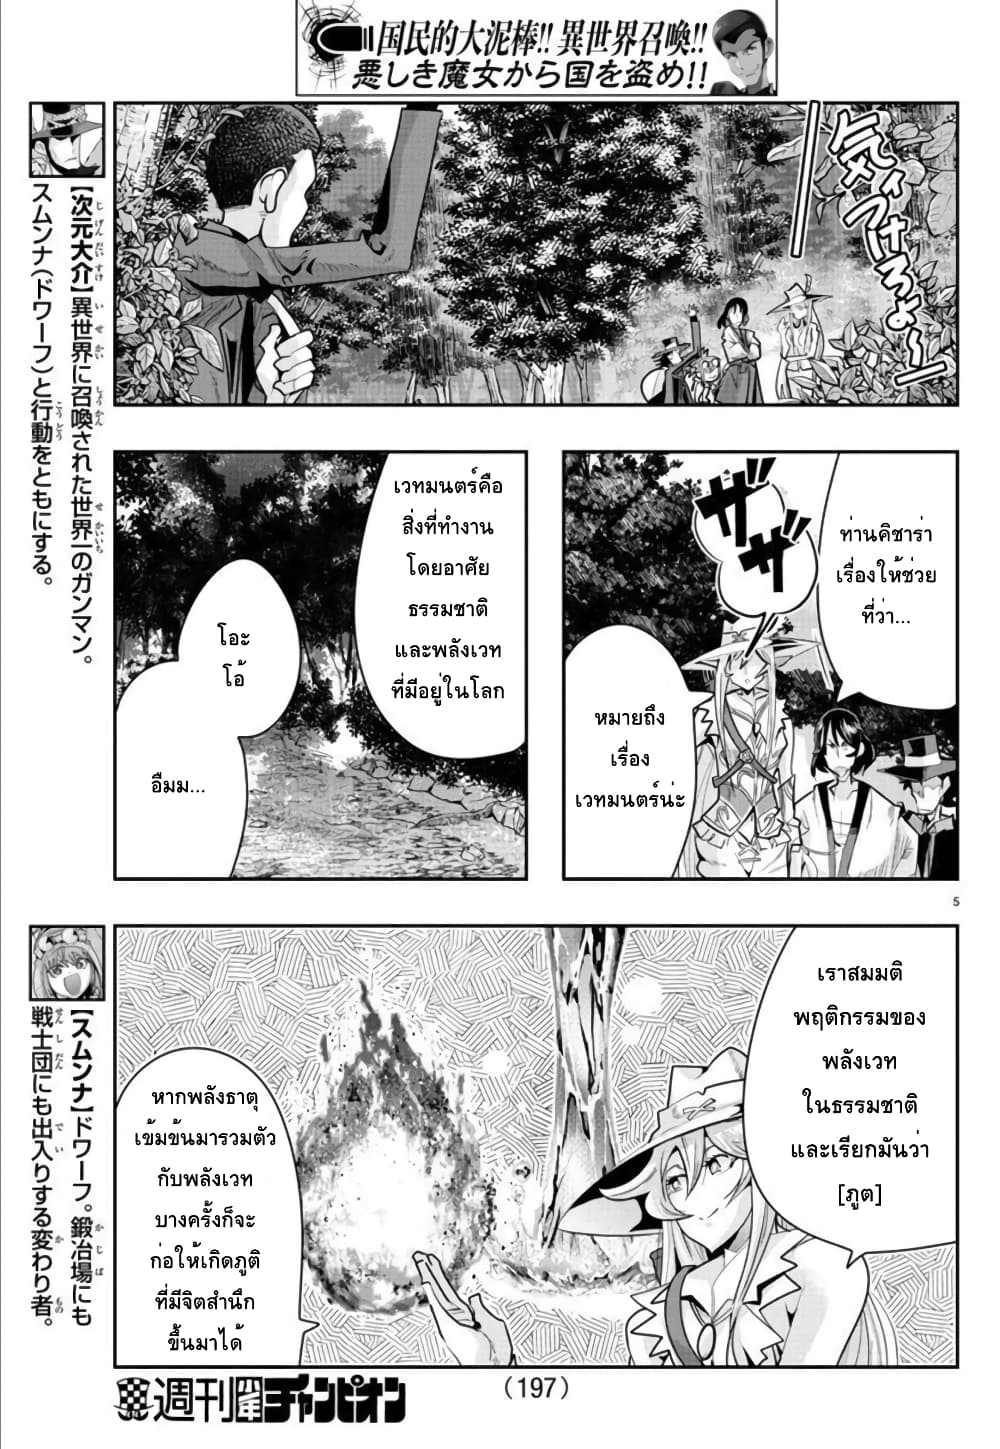 Lupin Sansei Isekai no Himegimi 23-ตัดผ่านความคิดชั่วร้าย ซันเท็ตสึเคนกับภูตแห่งสายลม